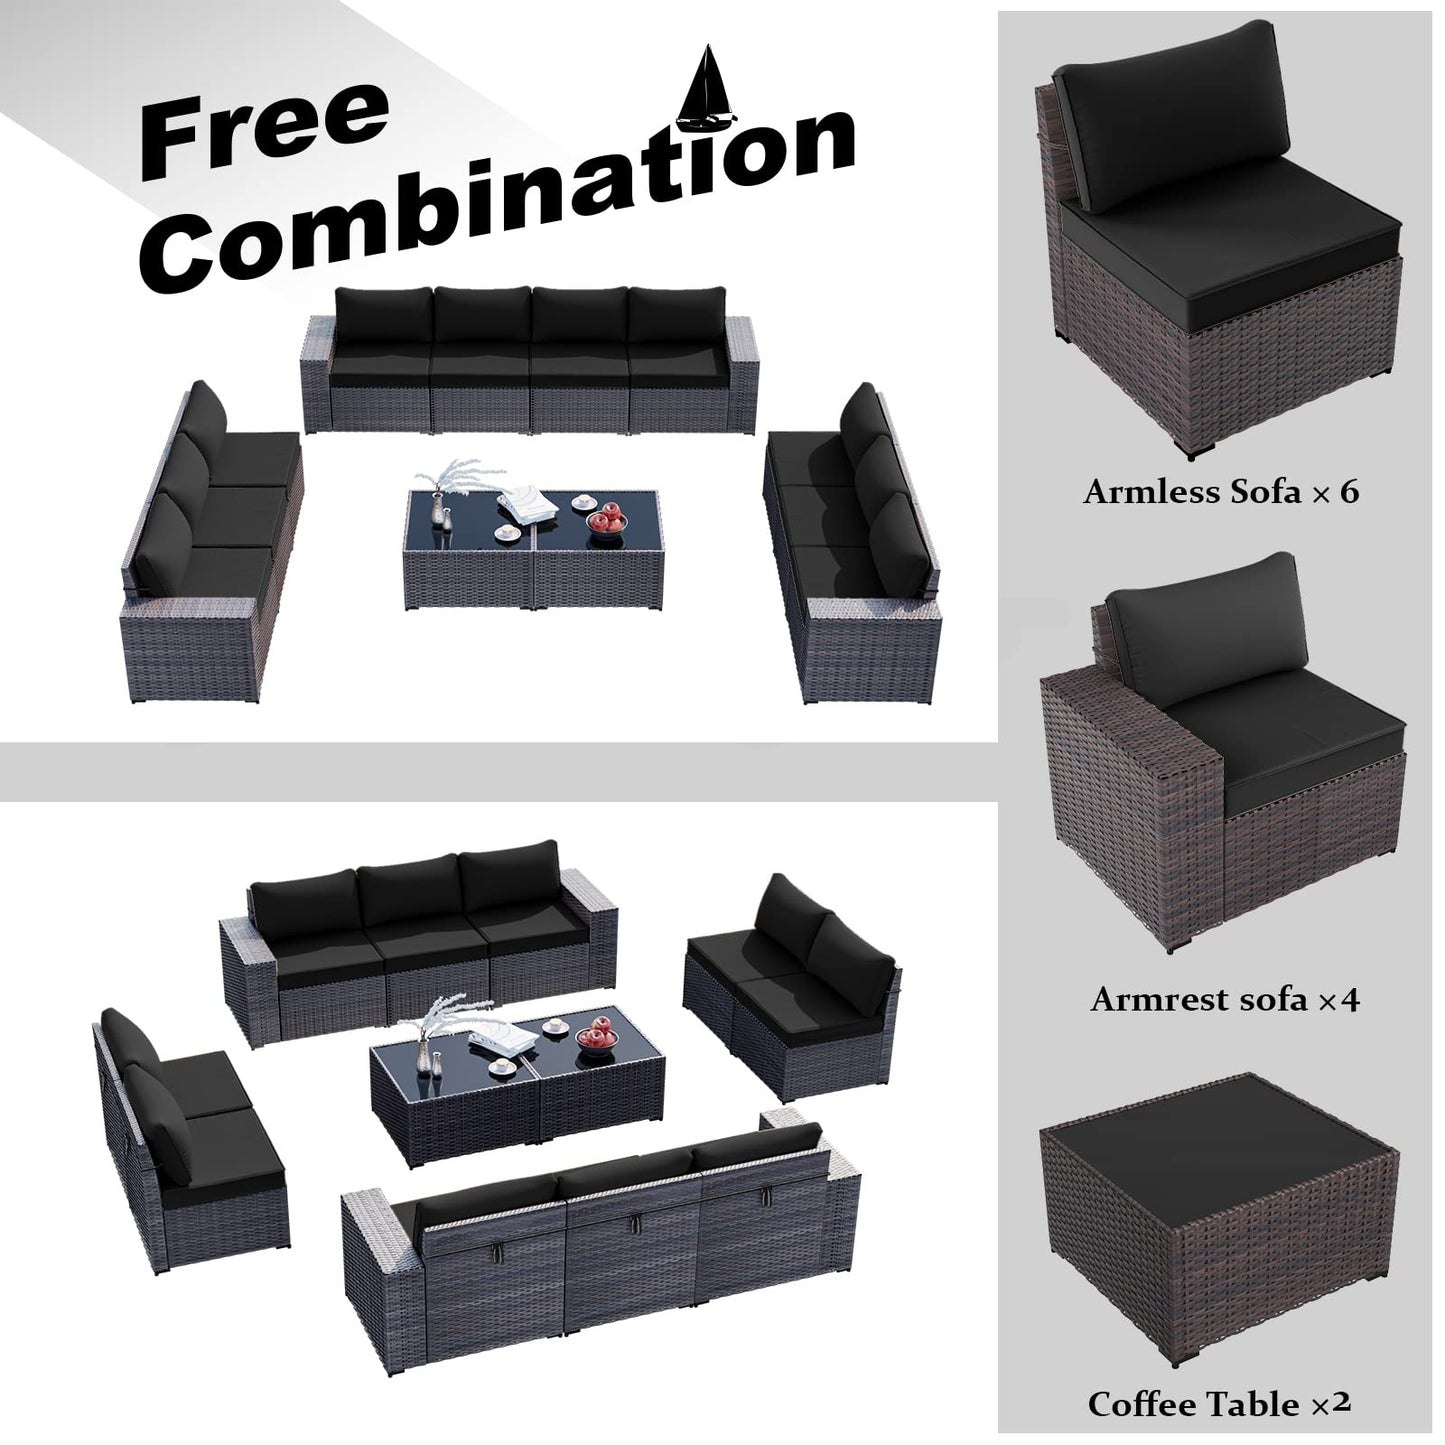 ALAULM 12 Pieces High-back Sofas Outdoor Patio Furniture Set, Sectional Sofa Sets